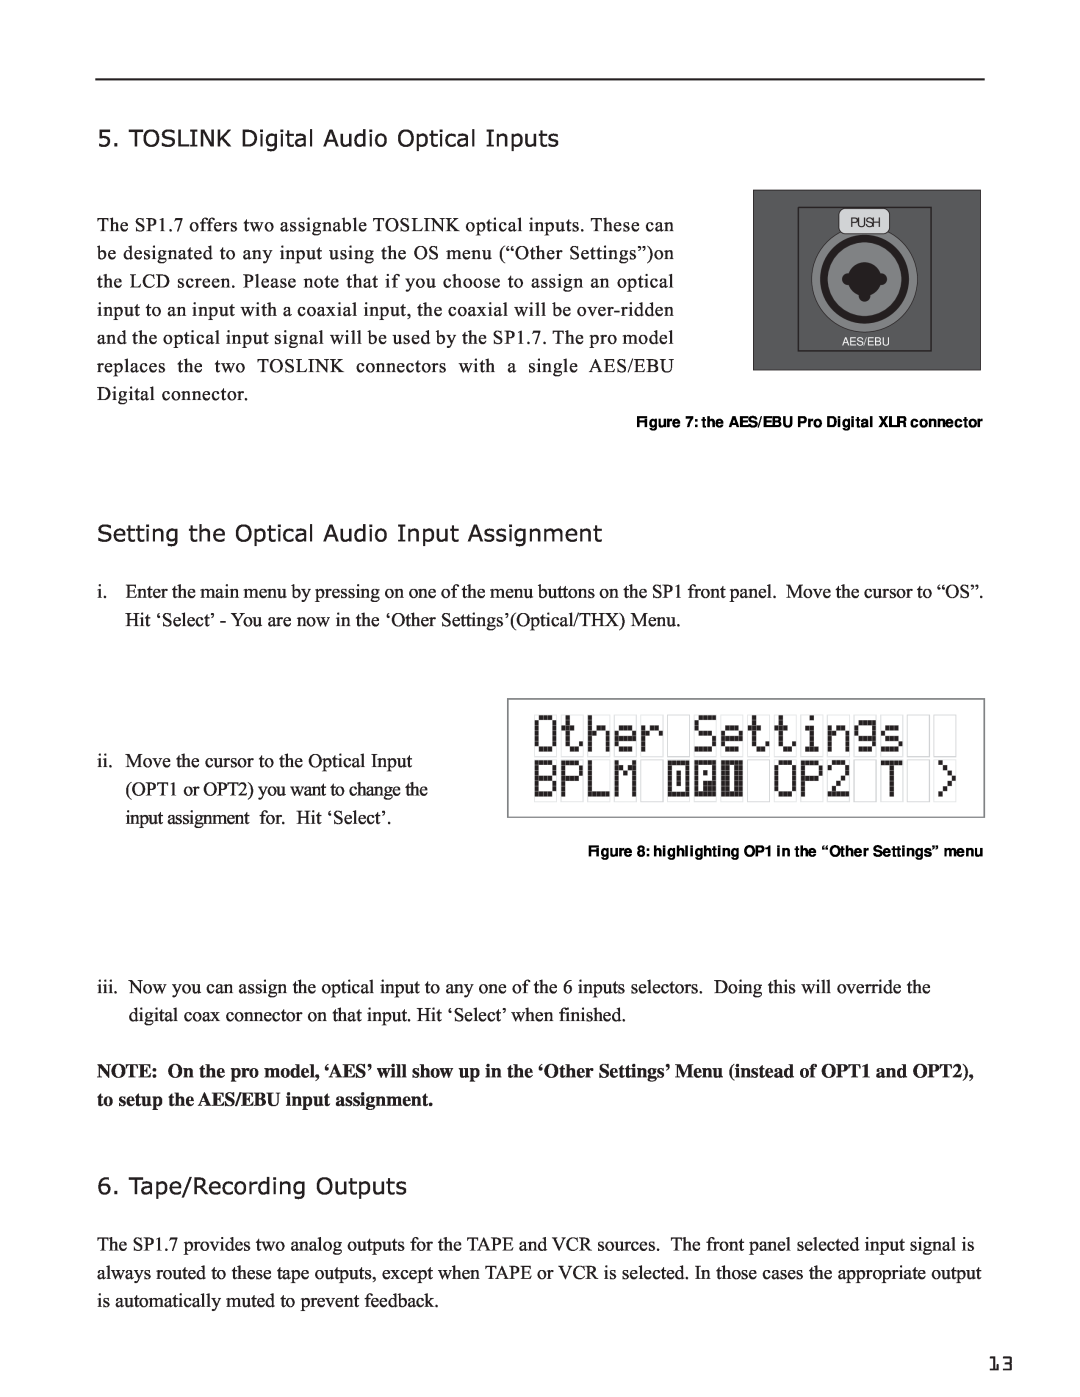 Bryston SP1.7 Series manual TOSLINK Digital Audio Optical Inputs, Setting the Optical Audio Input Assignment 